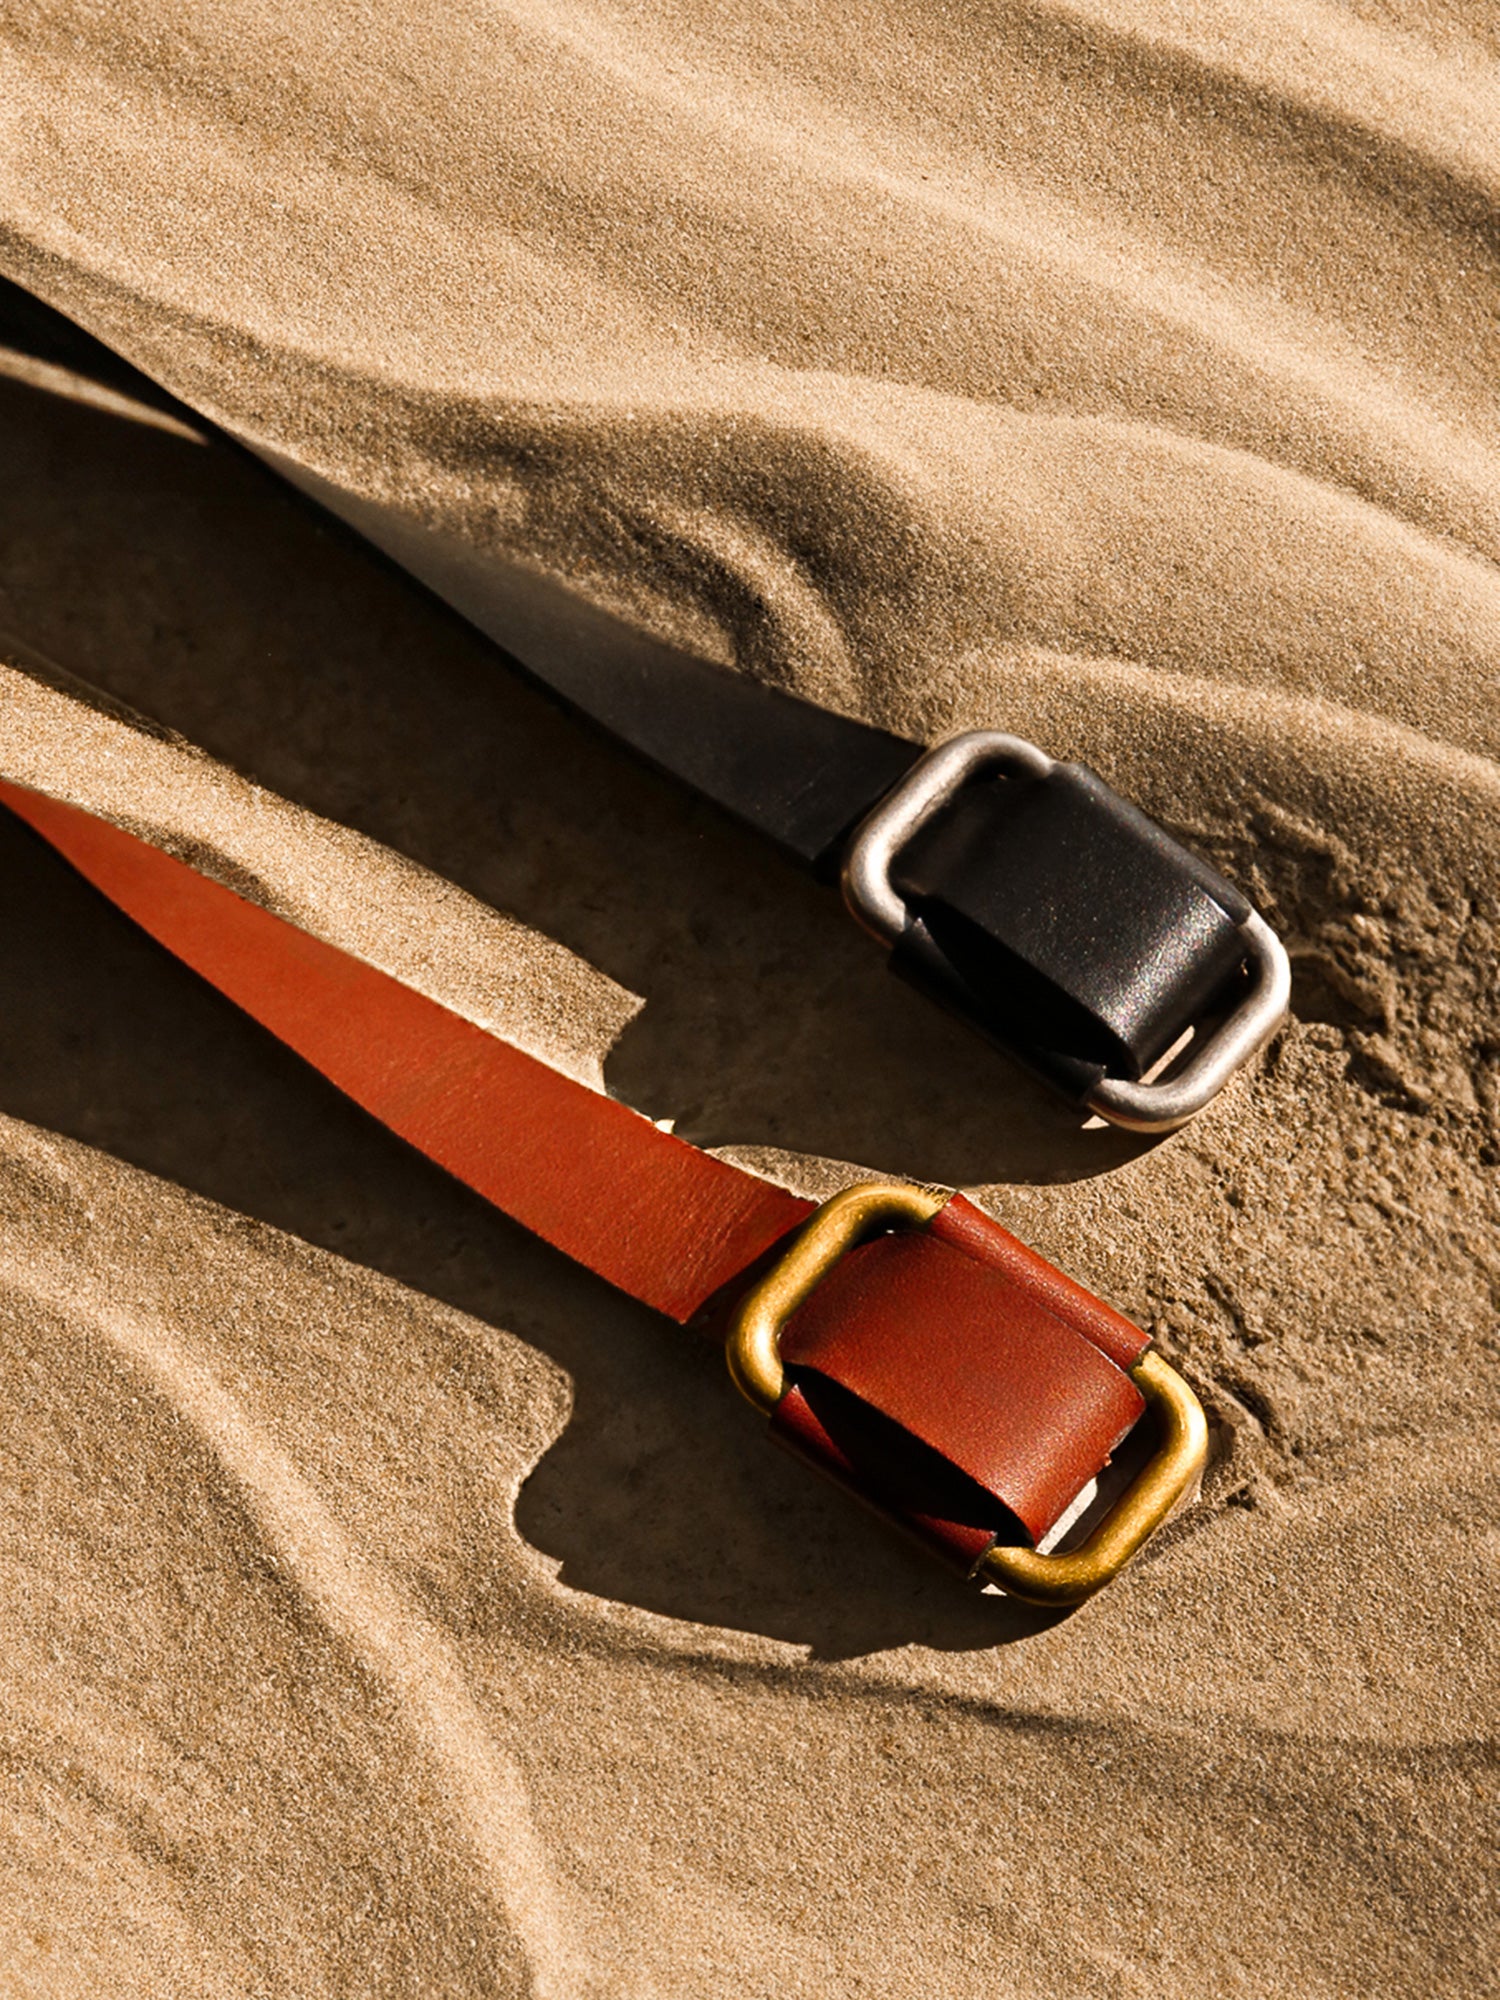 Saddle brown & black leather buckle belts close up 